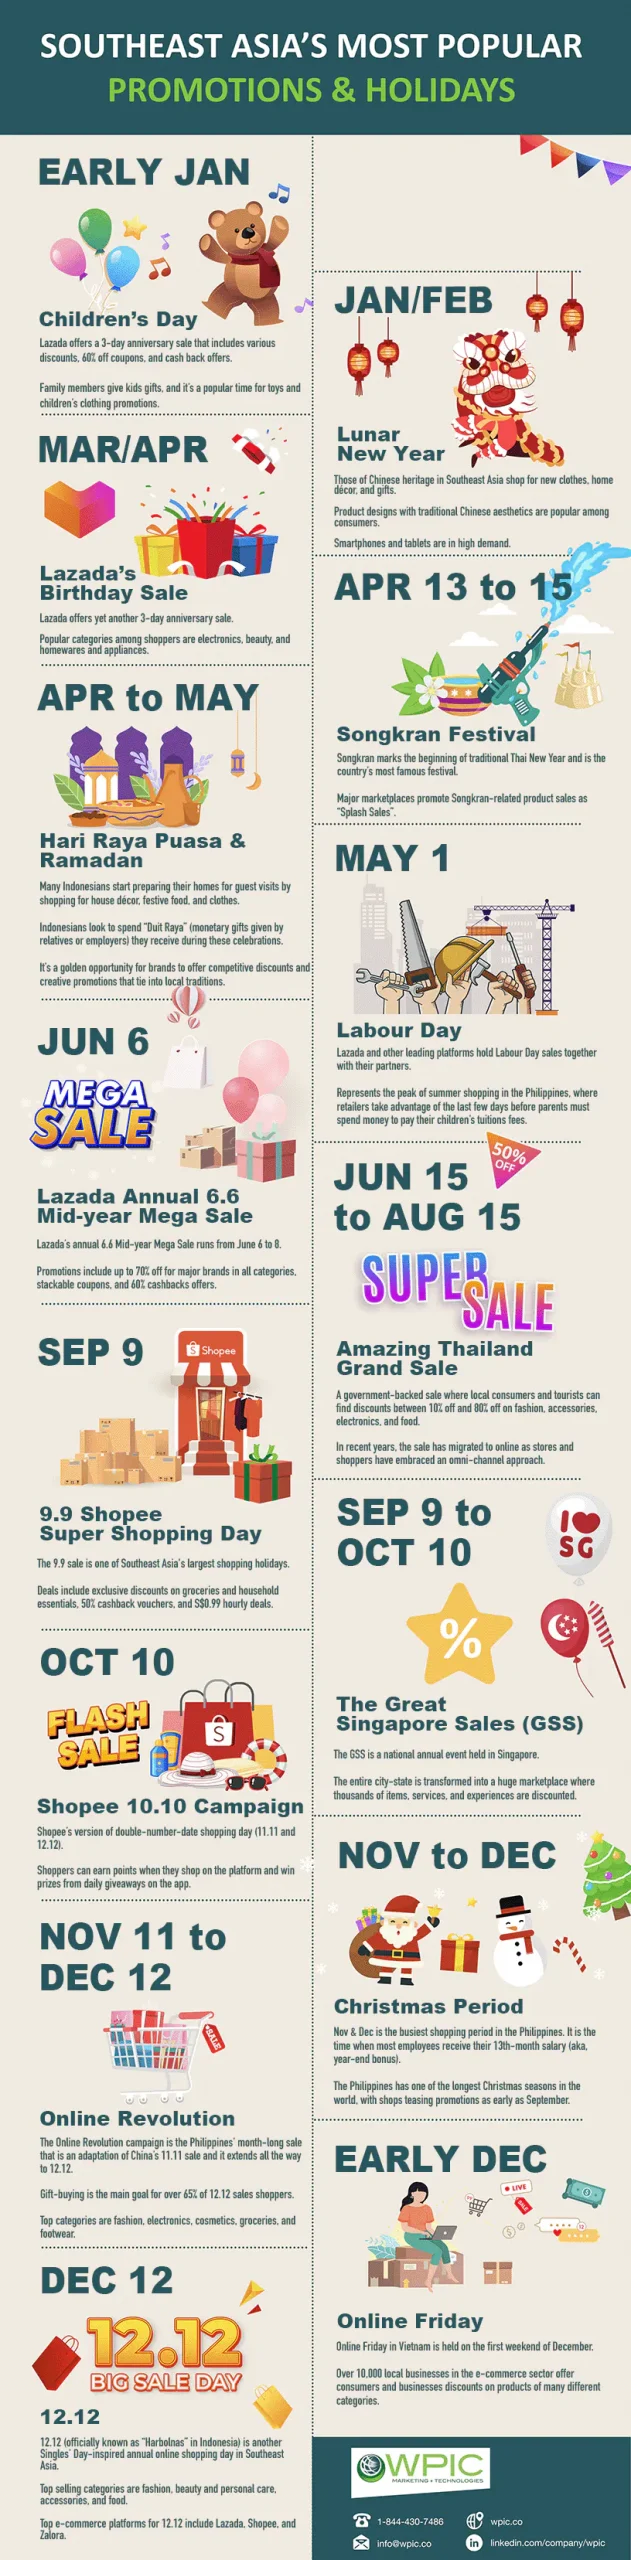 Southeast Asia Promotional Marketing Calendar